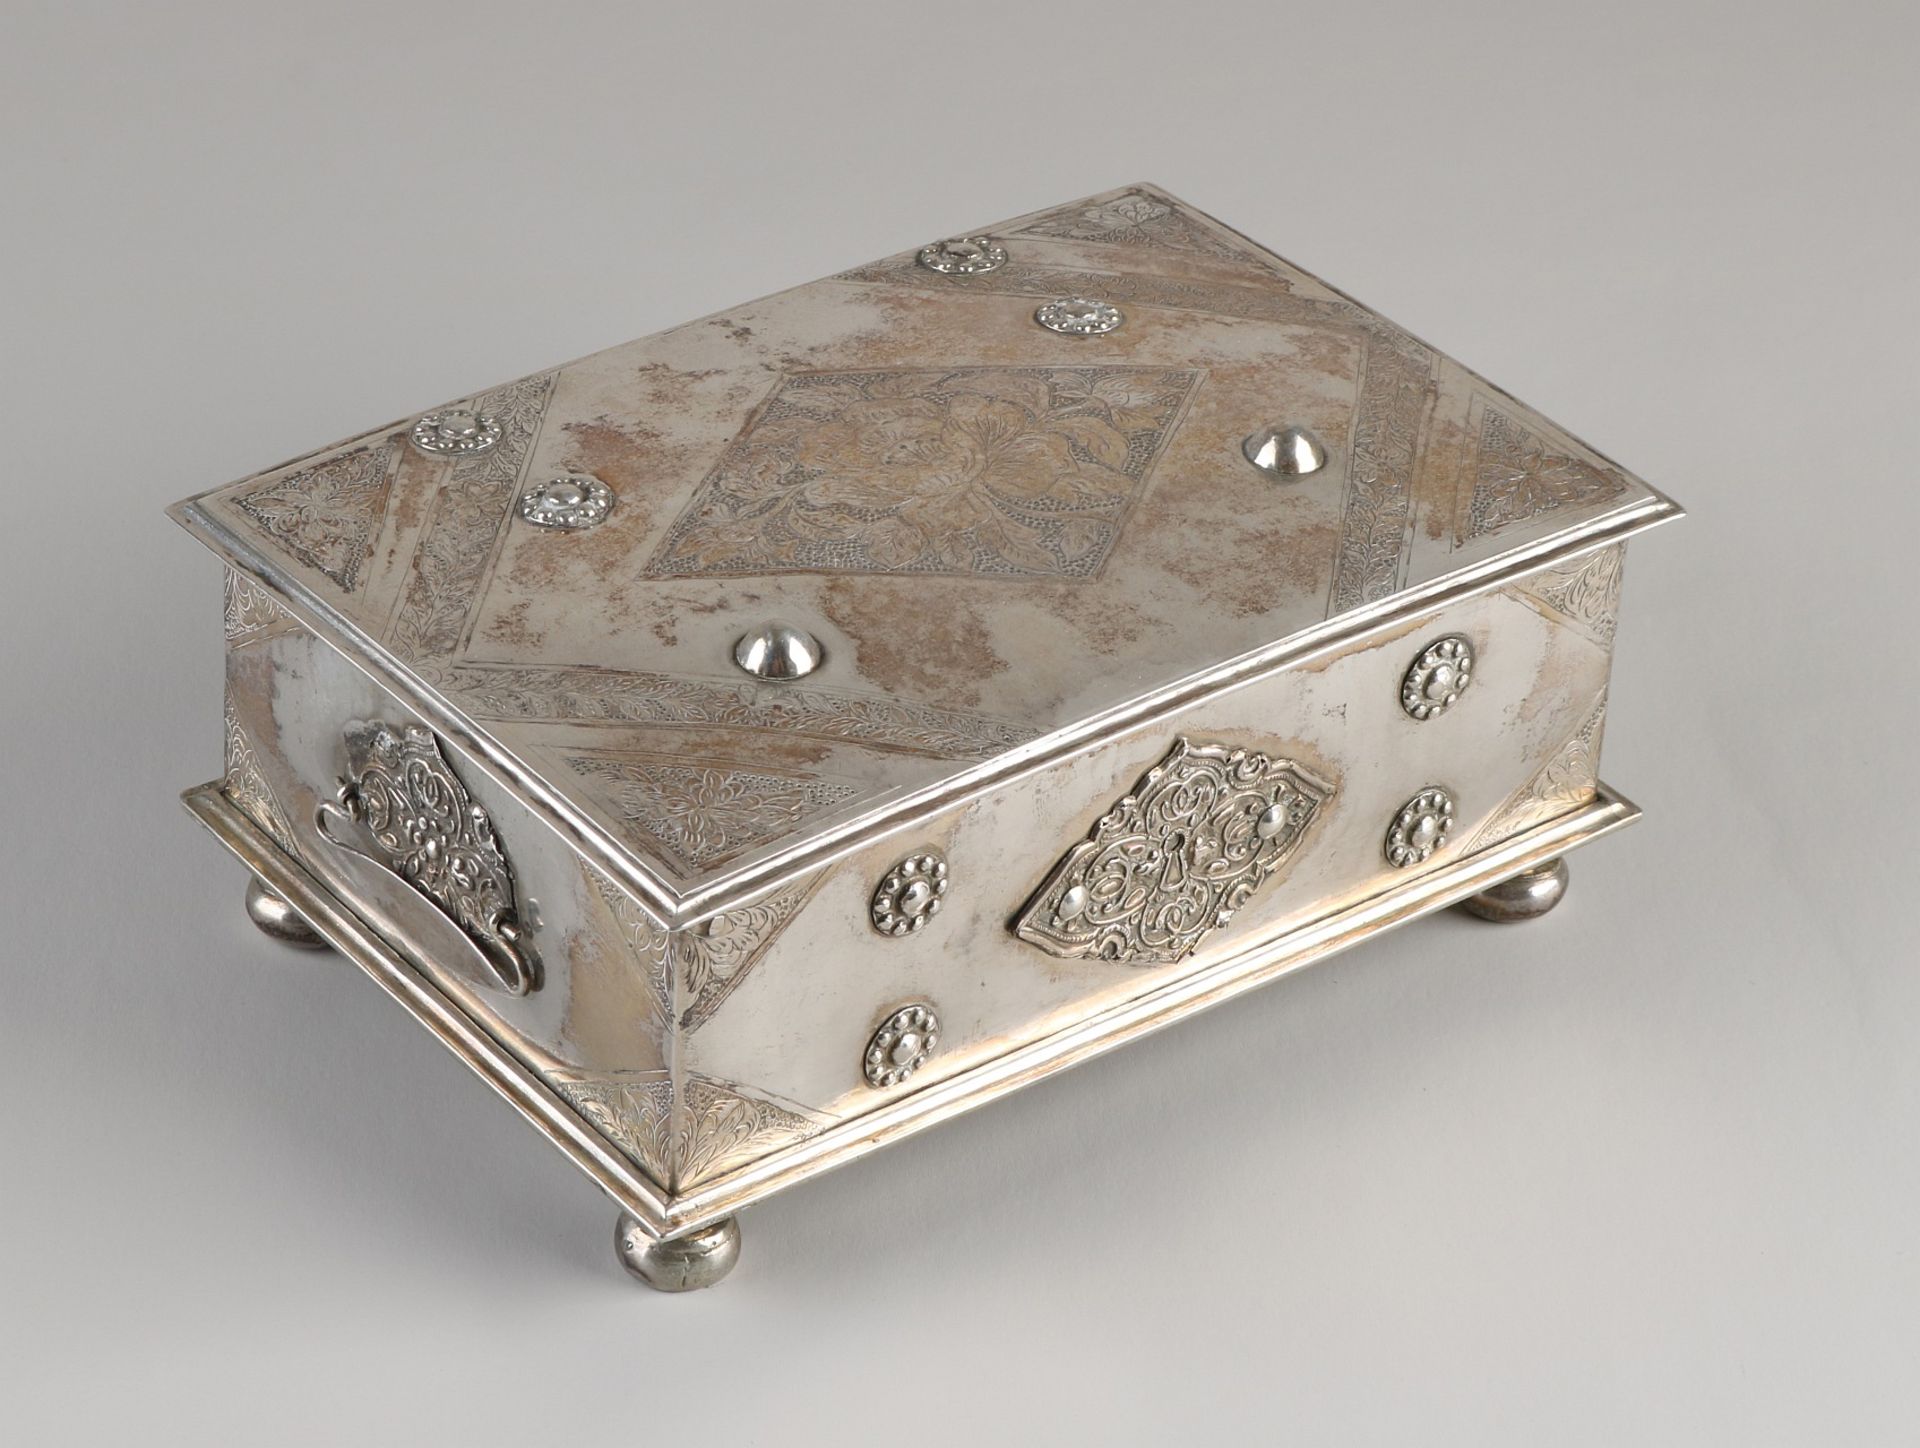 Koloniale Silberbox, 800/000, rechteckiges Modell auf 4 Beinen, verziert mit floraler Kolonialgravu